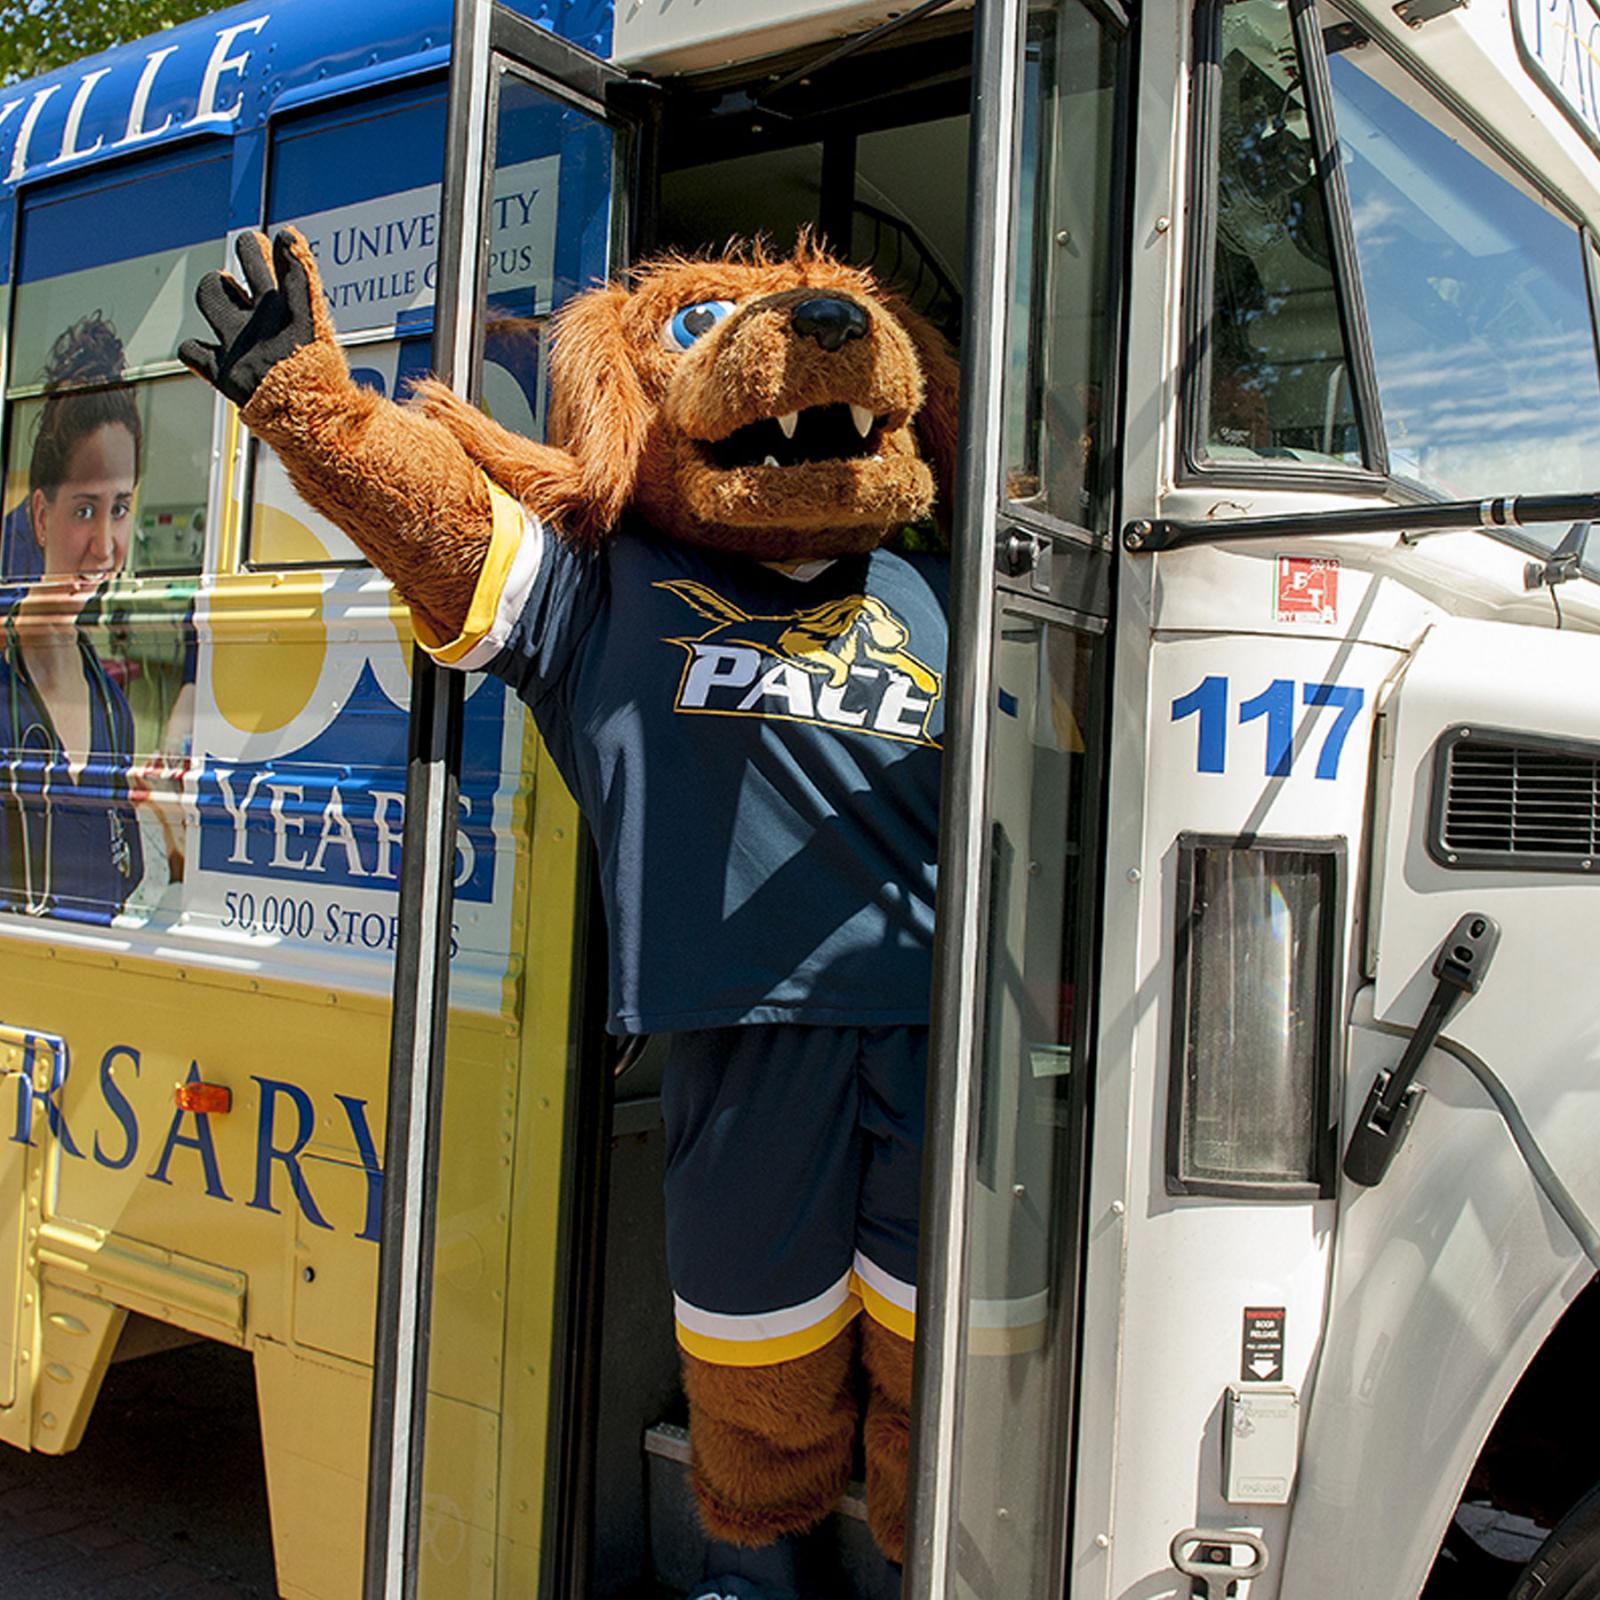 Pace University's mascot T-bone waving from a Pace shuttle bus.